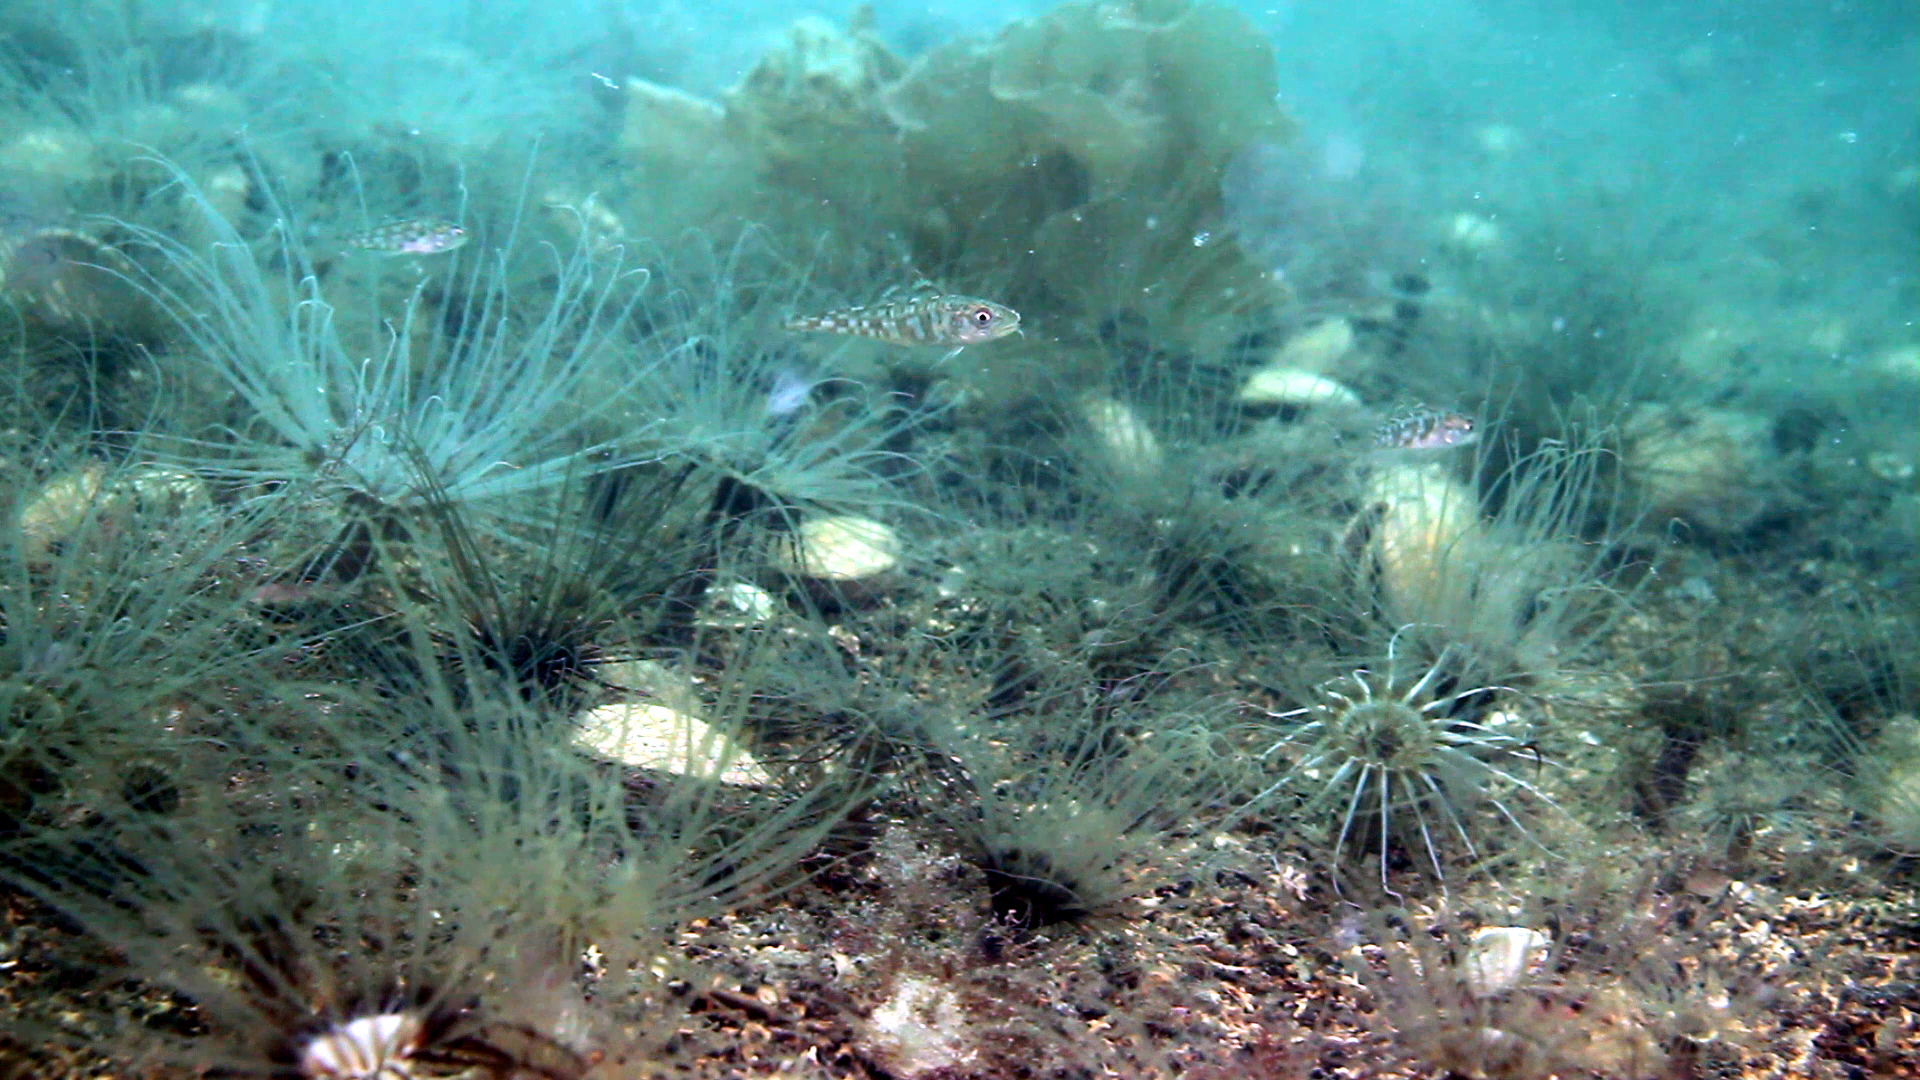 Image: Maerl seaweed, juvenile cod & anemones inside the reserve (credit: Howard Wood)